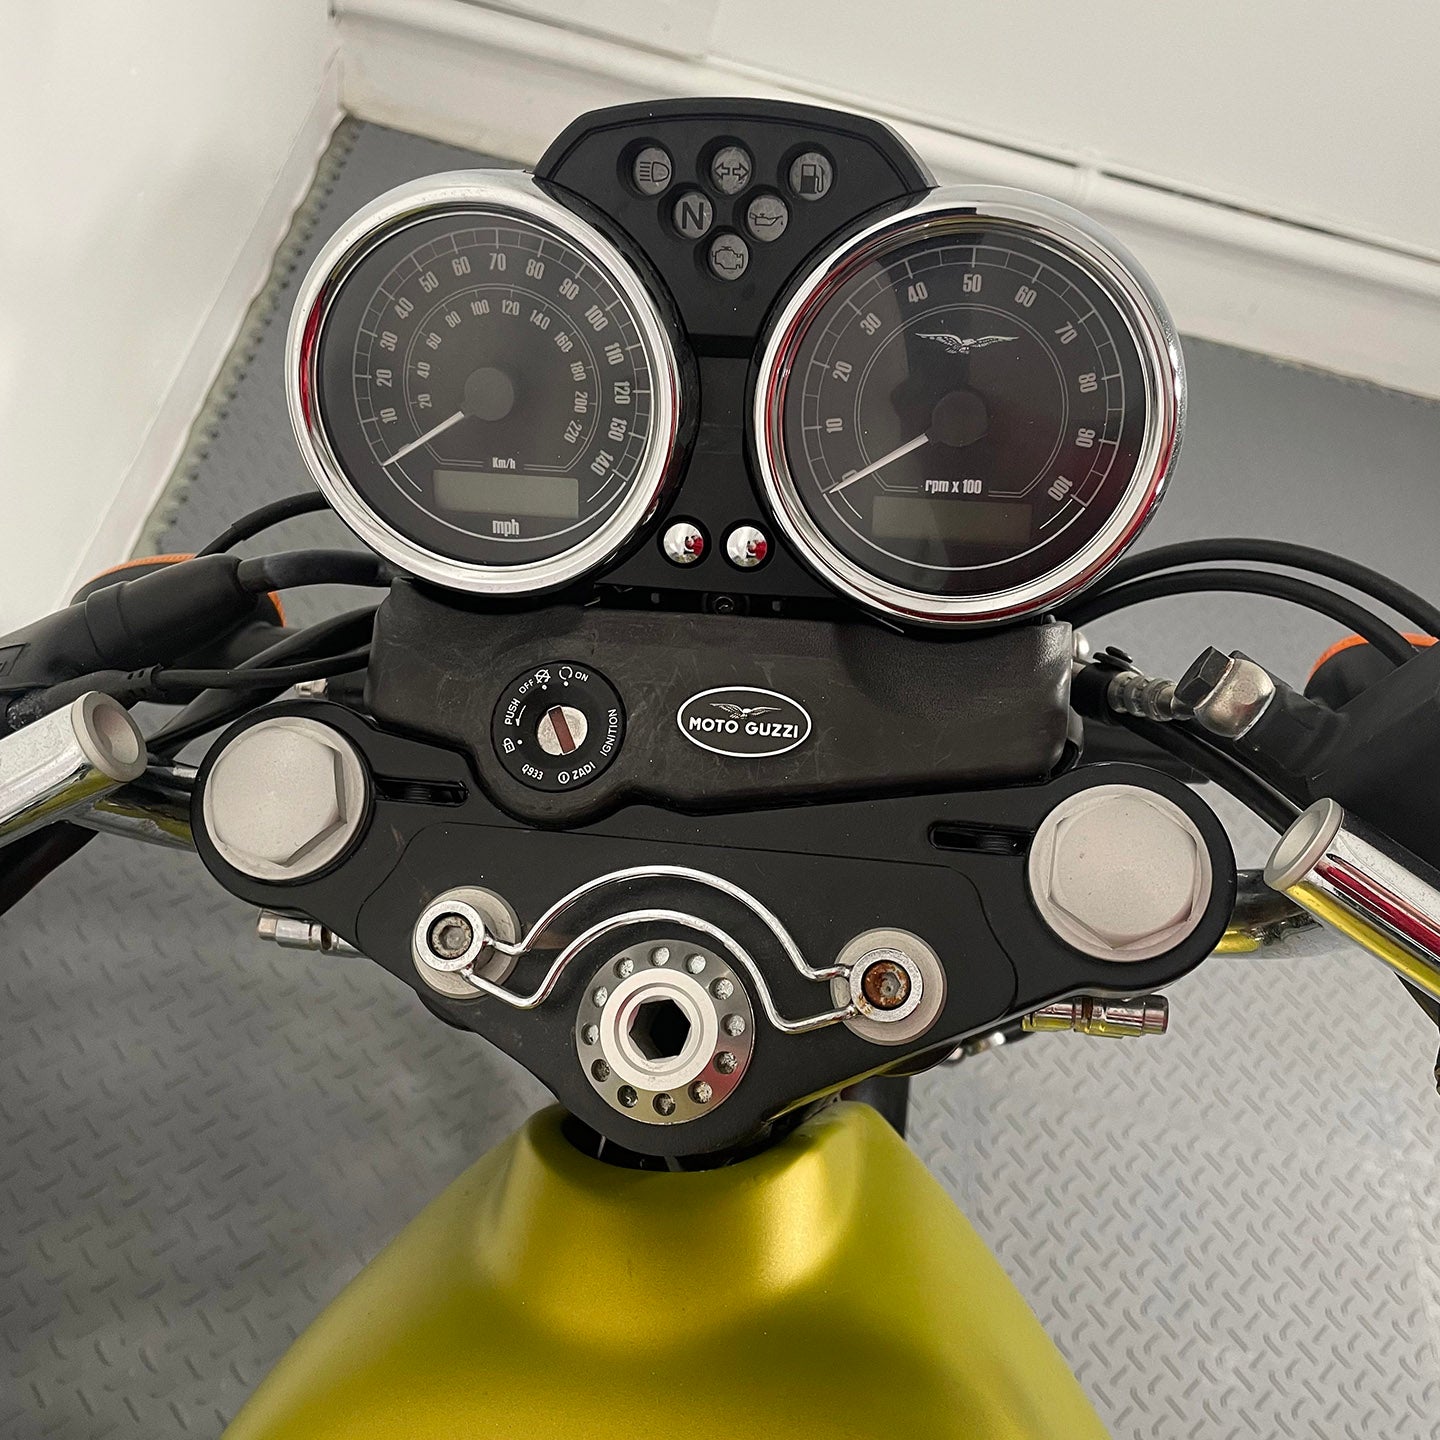 2010 Moto Guzzi V7 Classic Cafe (2,744 Miles)